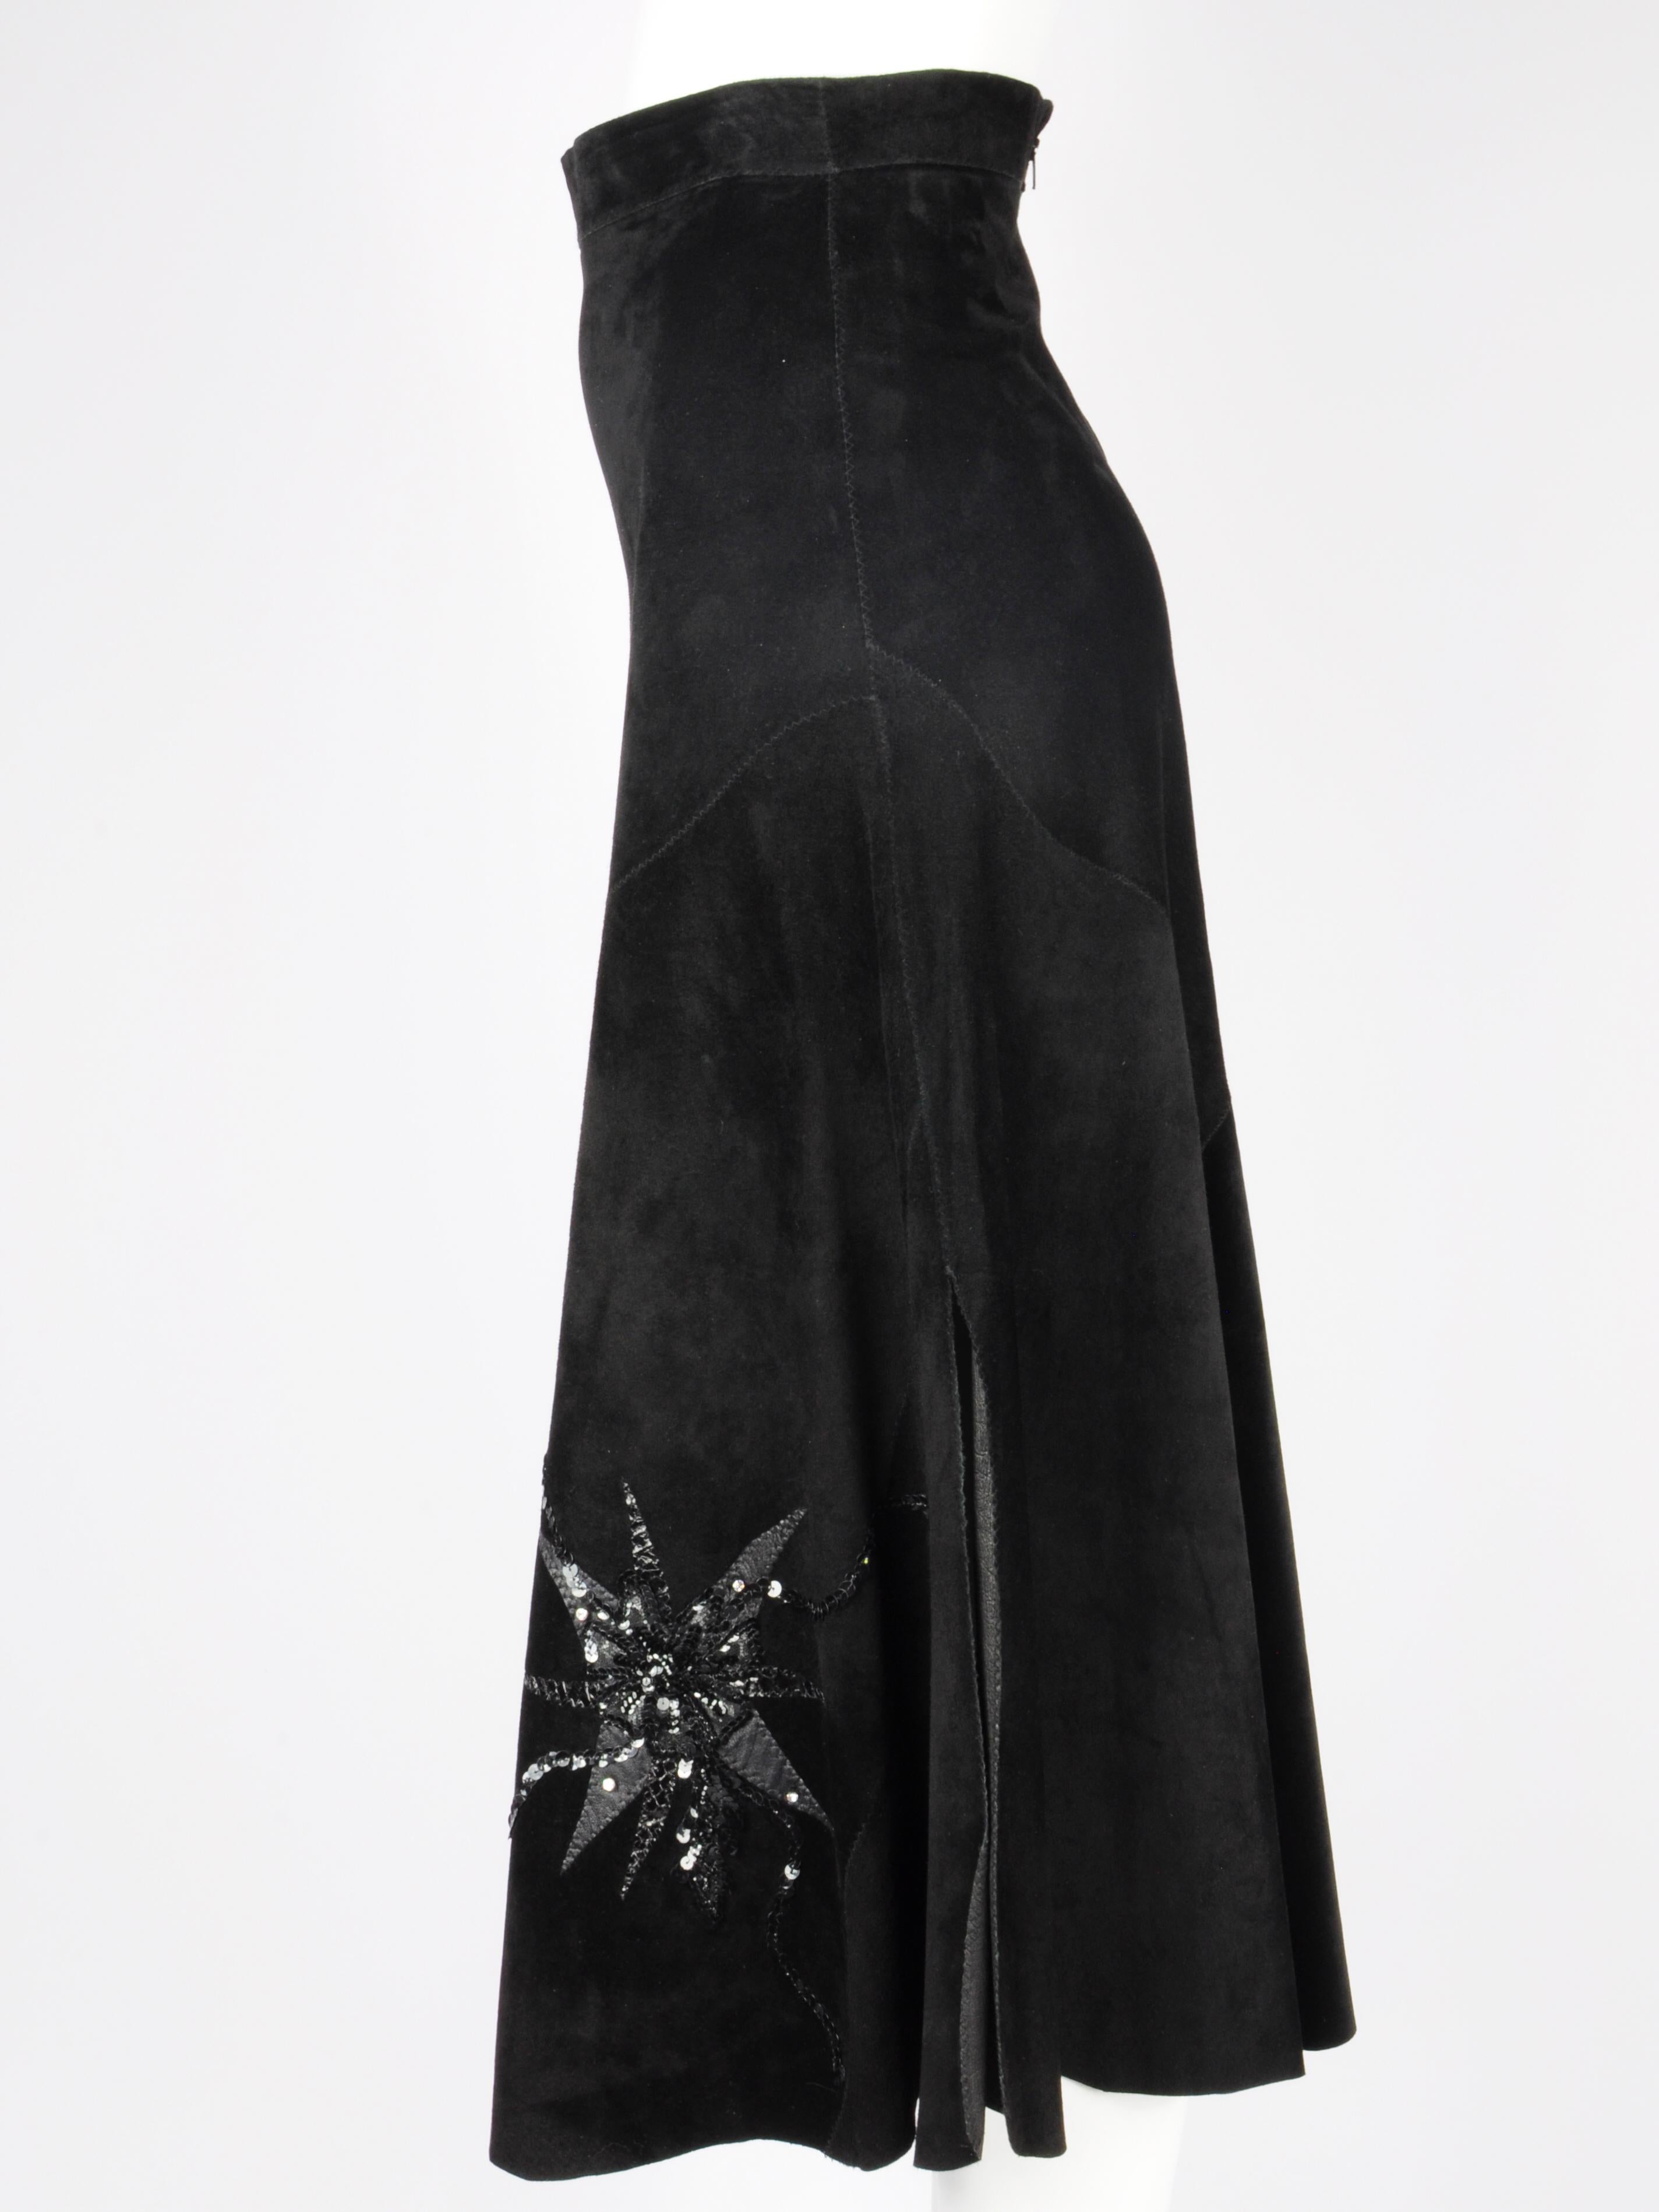 Natasa Dusseldorf St Tropez Suede Midi Skirt Star Patchwork Embellishment 1980s For Sale 1